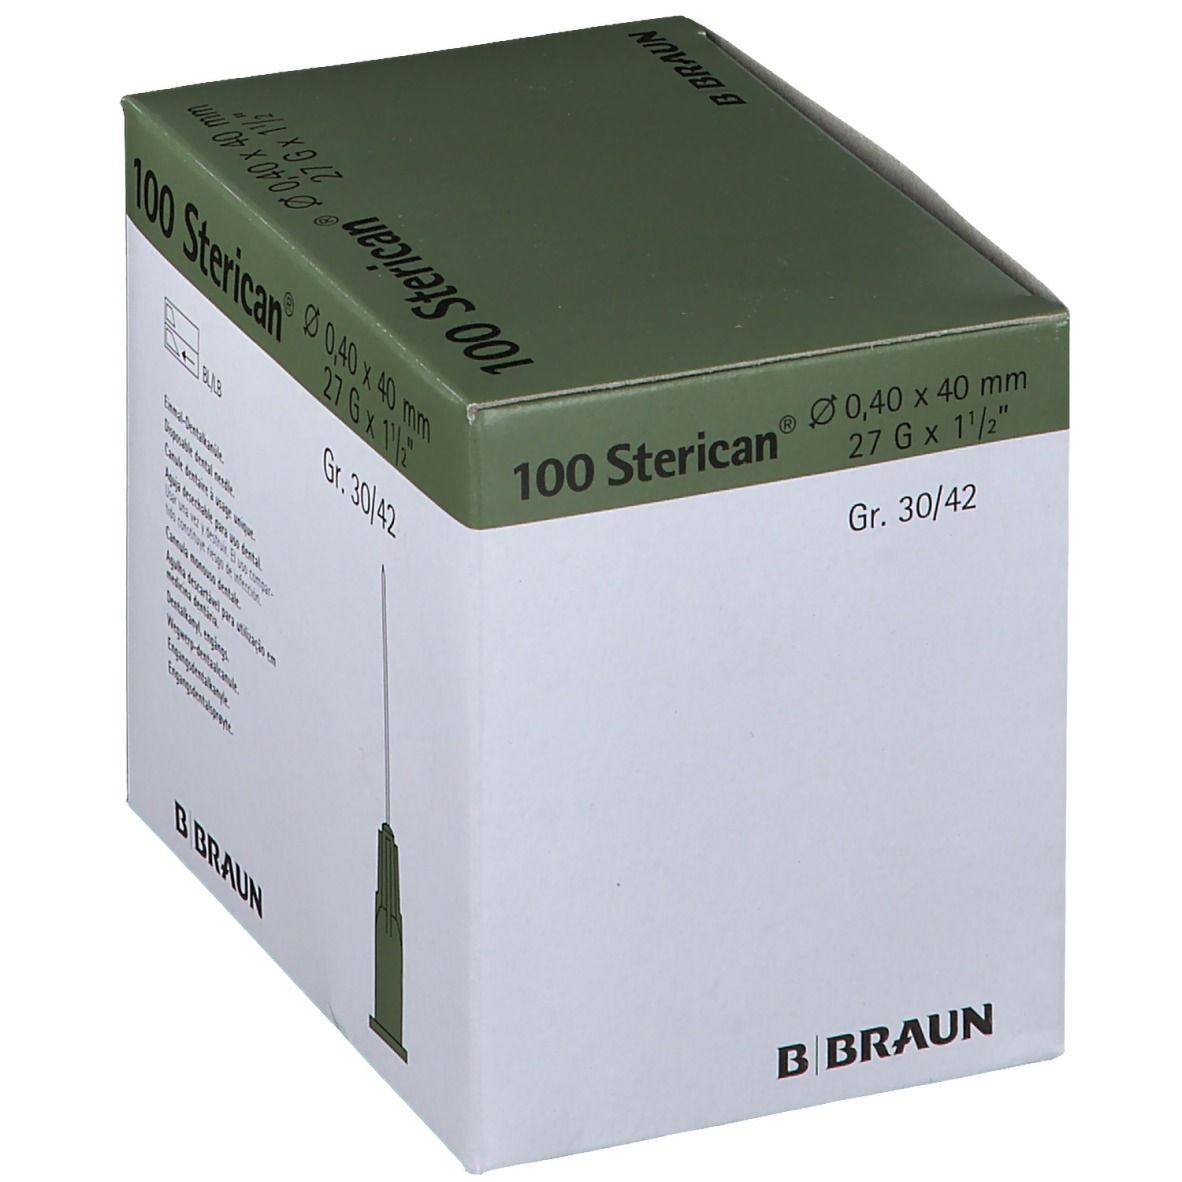 Sterican® für Dental-Anästhesie G27 x 1 1/2 Zoll 0,40 x 40 mm grau